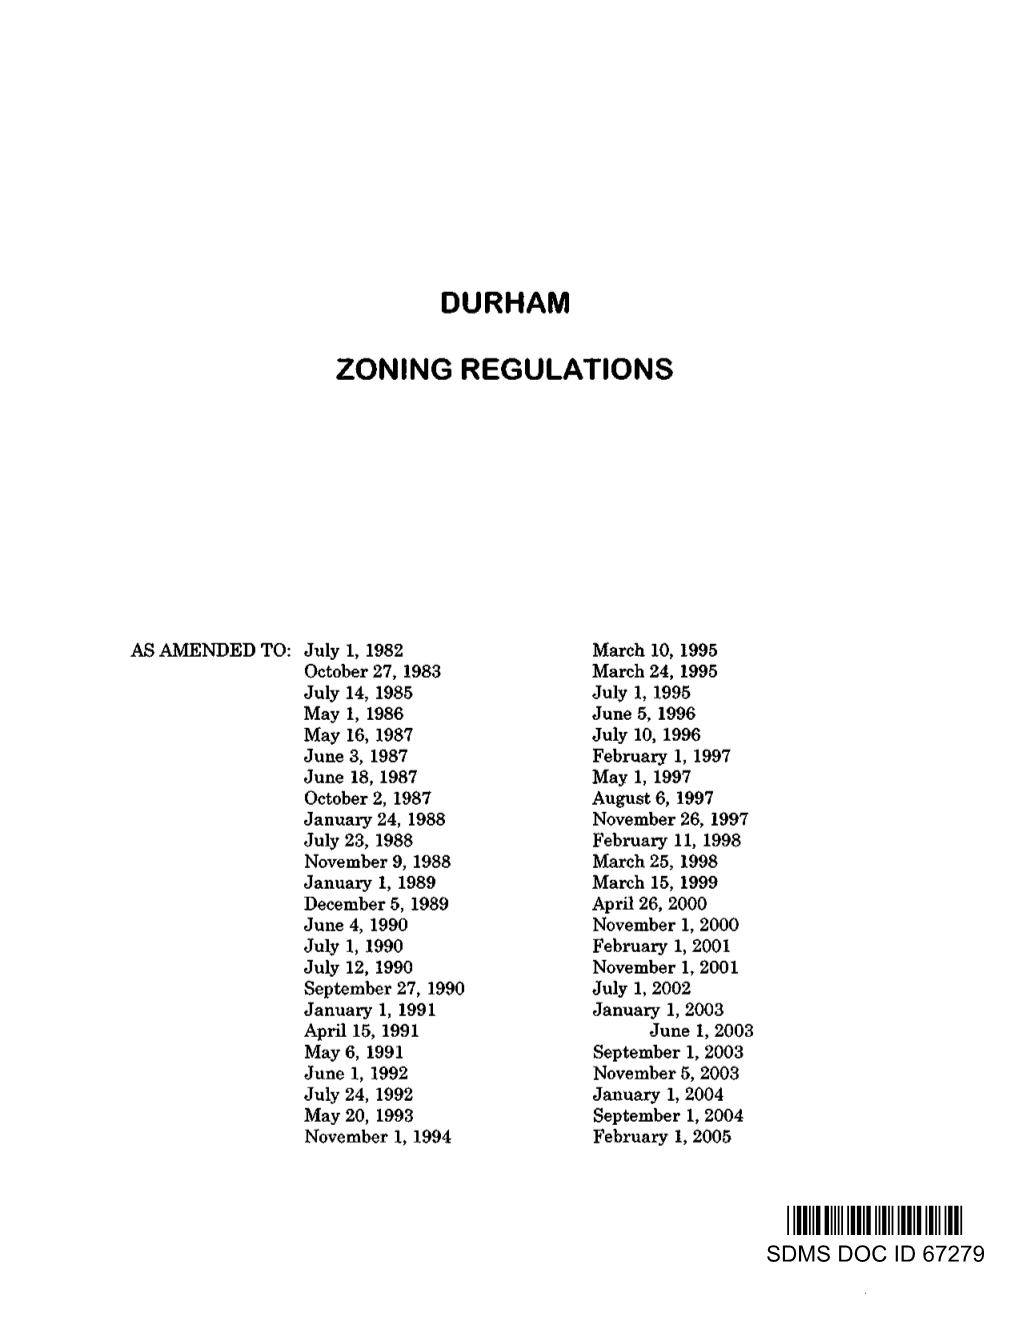 Durham Zoning Regulations Documentation